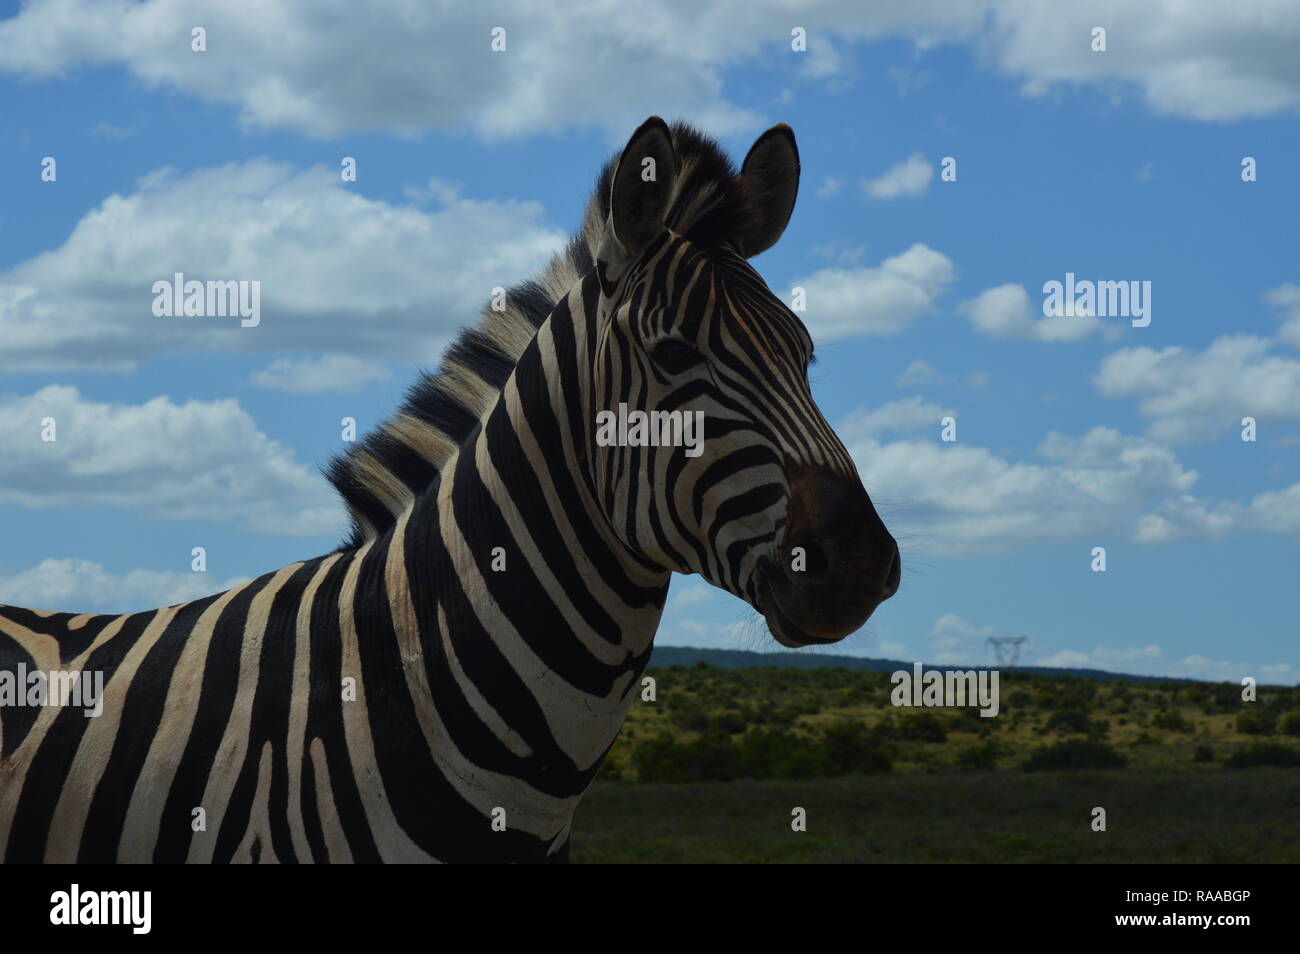 Zebra in South Africa Stock Photo